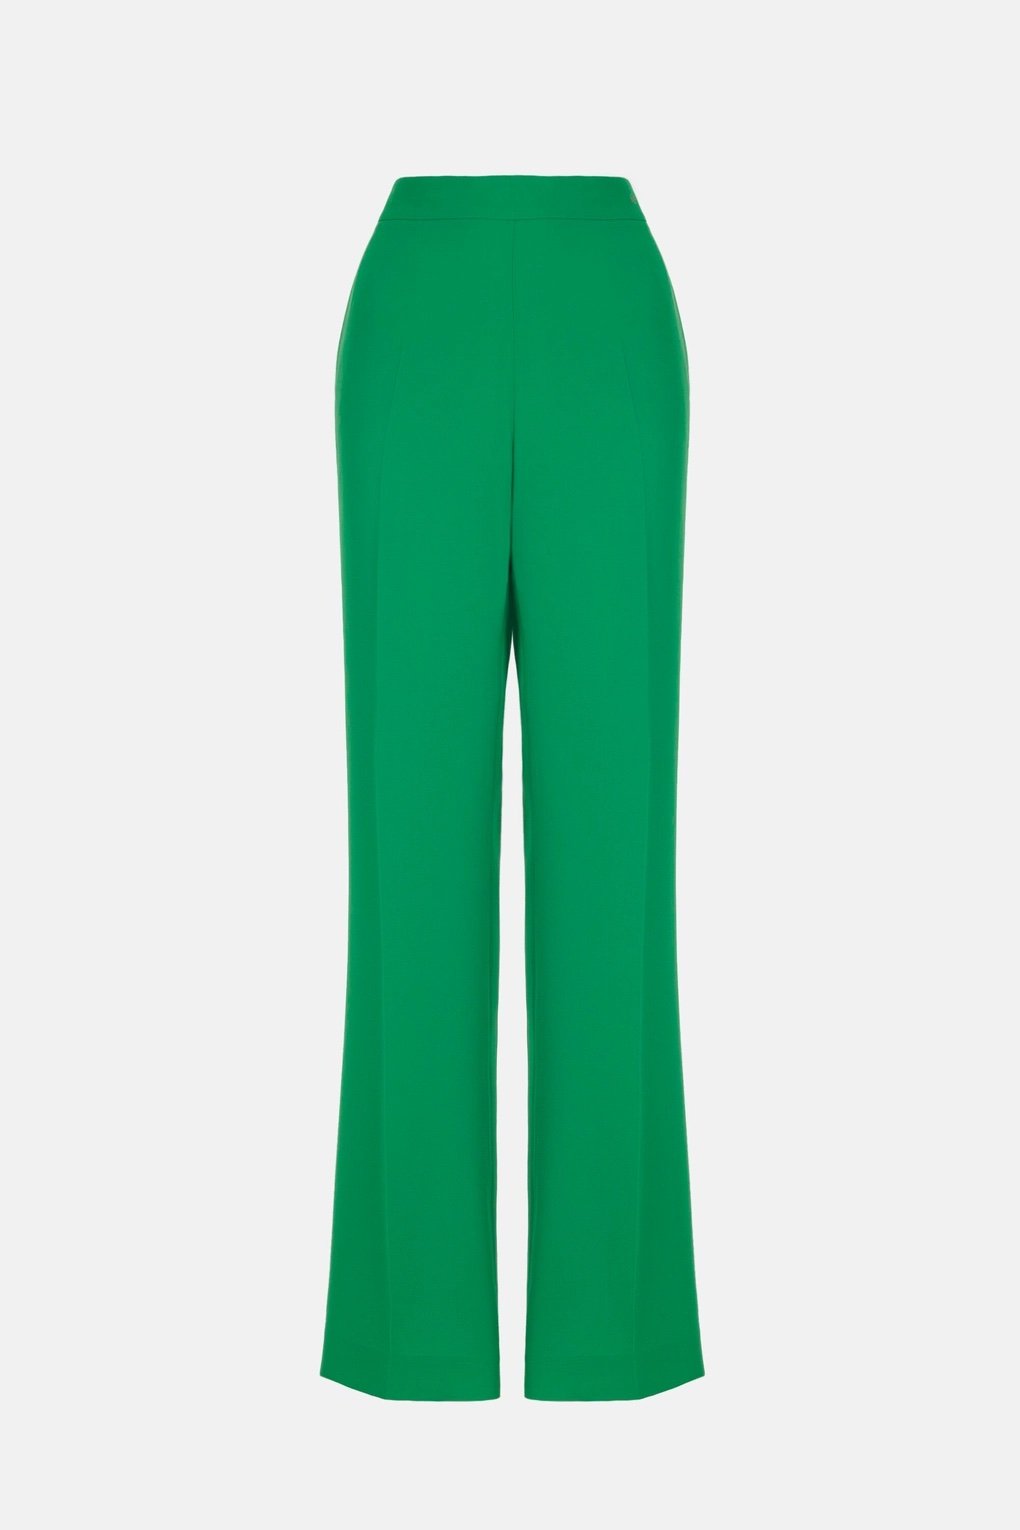 Carolina Herrera Satin Crepe Straight-Leg Trousers in Green — UFO No More